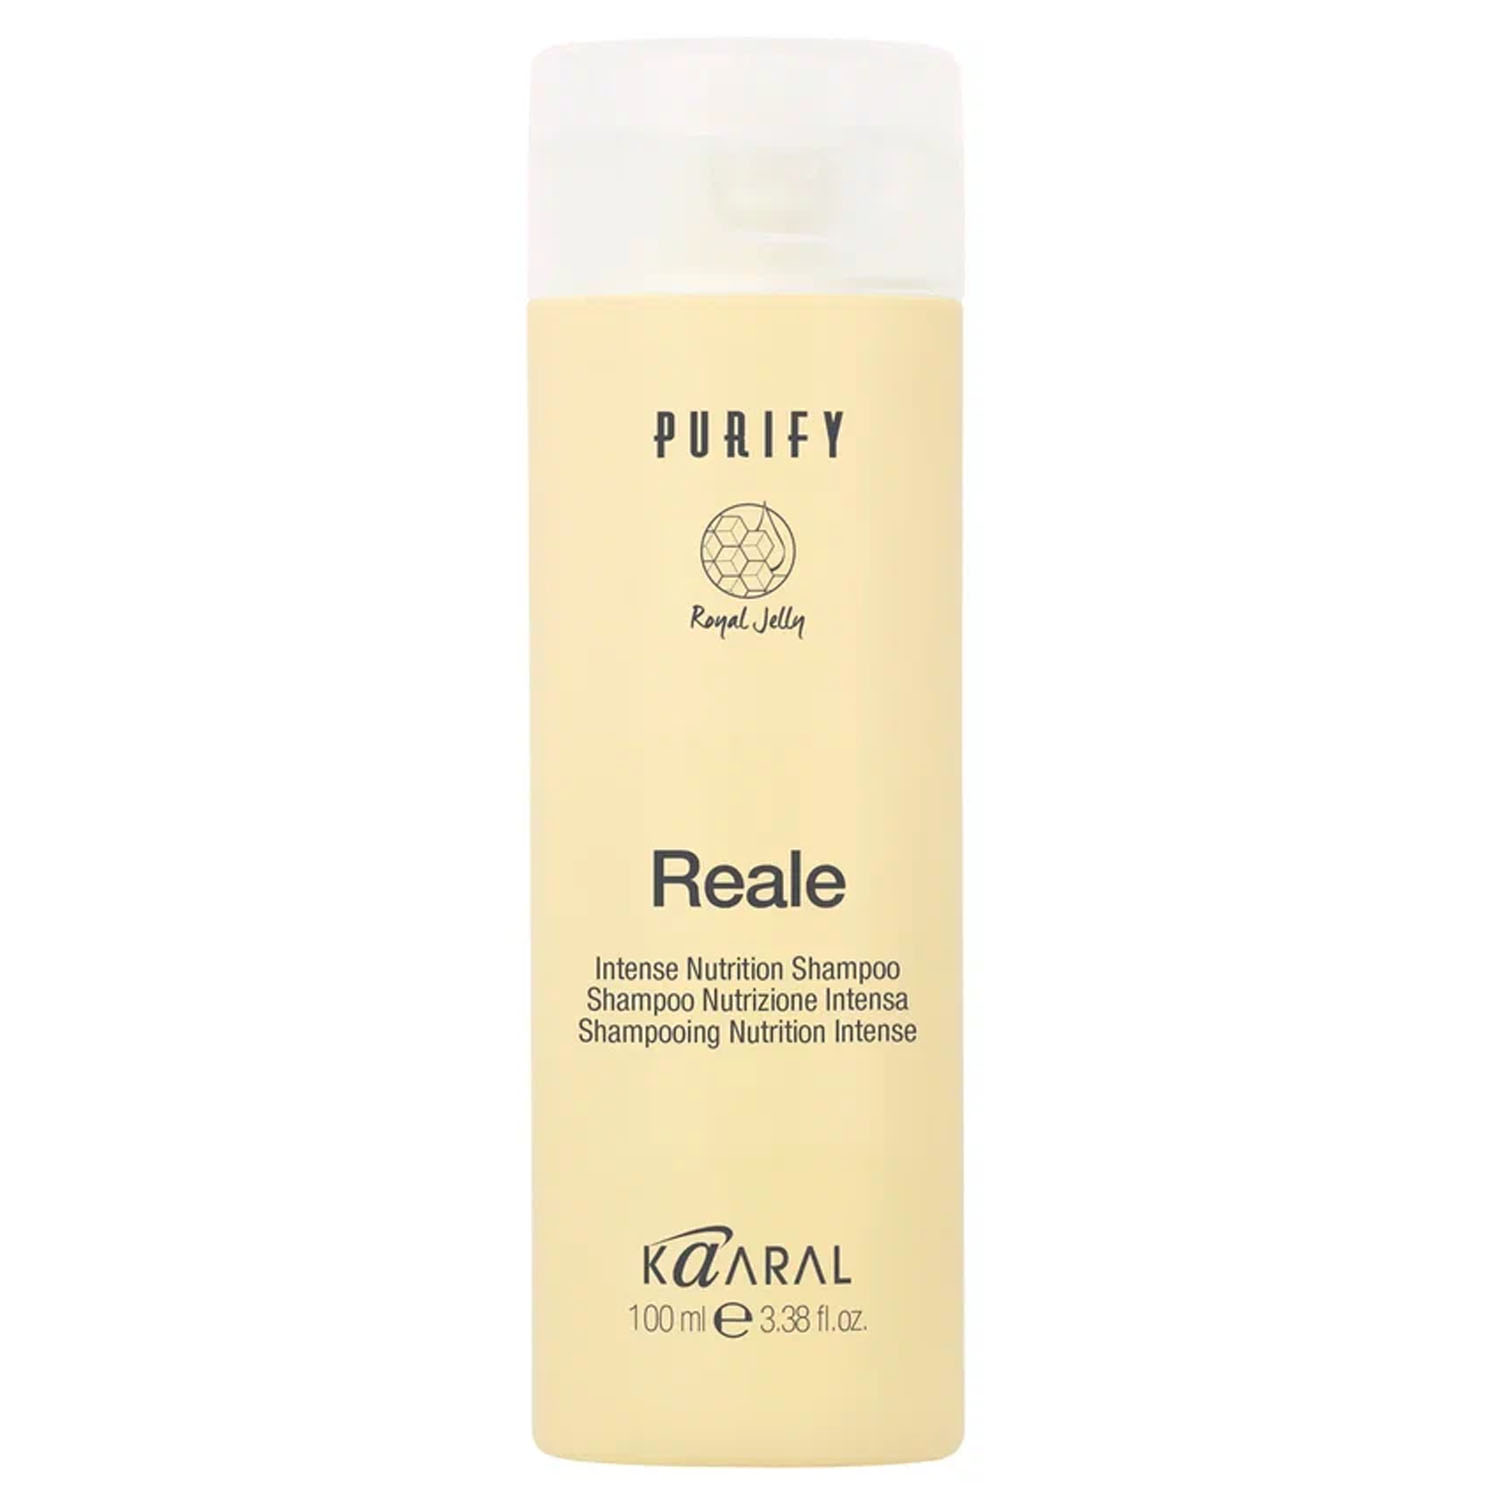 Kaaral Восстанавливающий шампунь для поврежденных волос Reale Intense Nutrition Shampoo, 100 мл (Kaaral, Purify) лосьон для поврежденных волос kaaral purify reale vials 12 10 мл